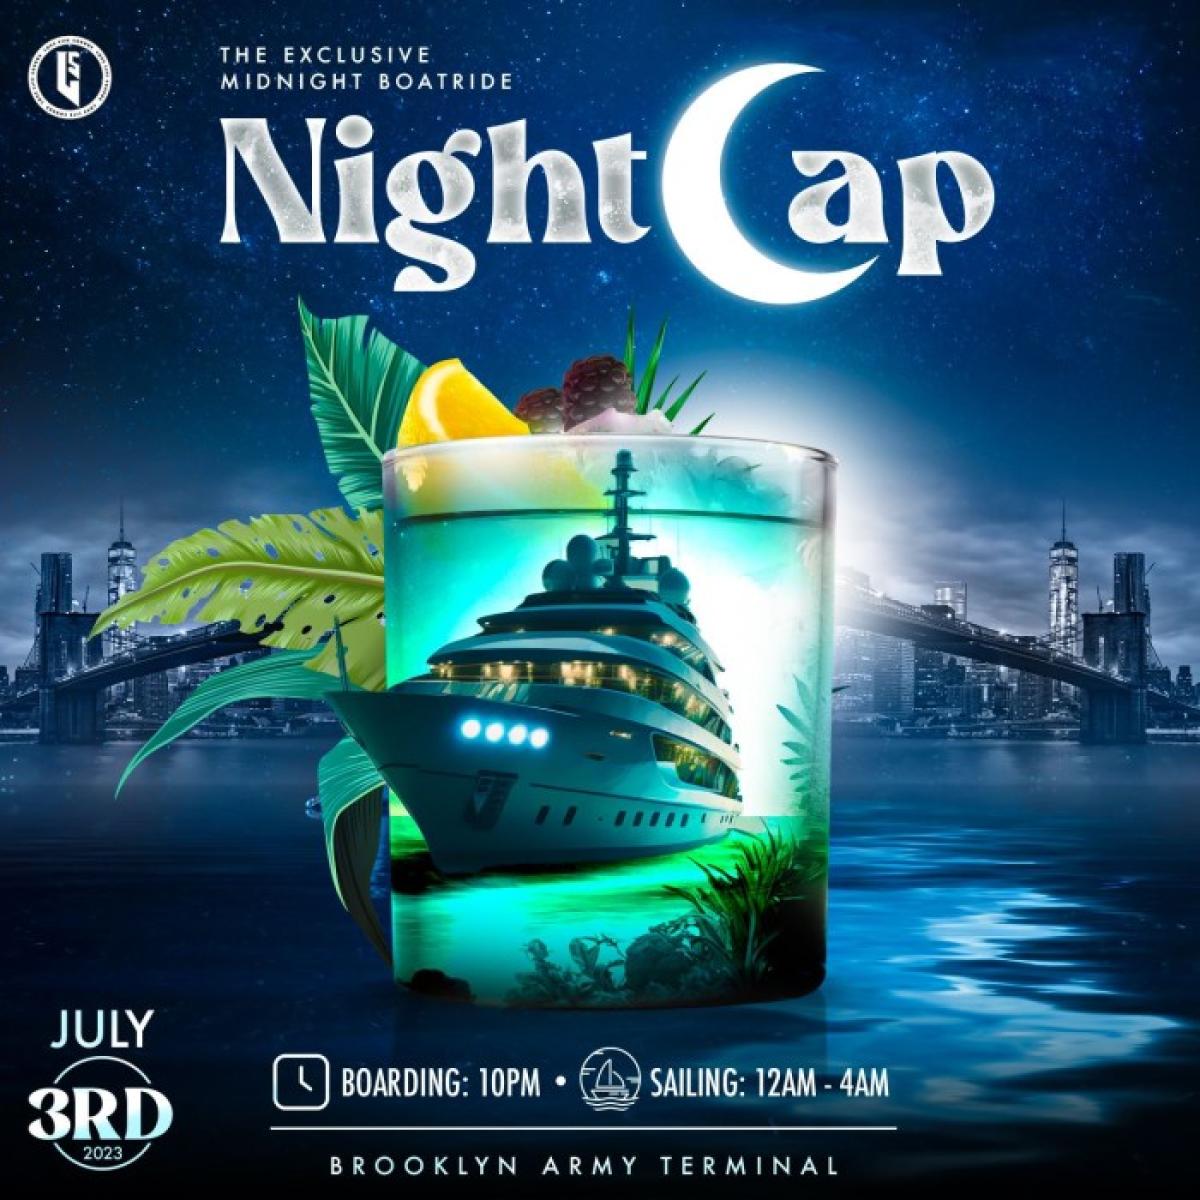 NiteCap: The Exclusive Midnight Boatride flyer or graphic.